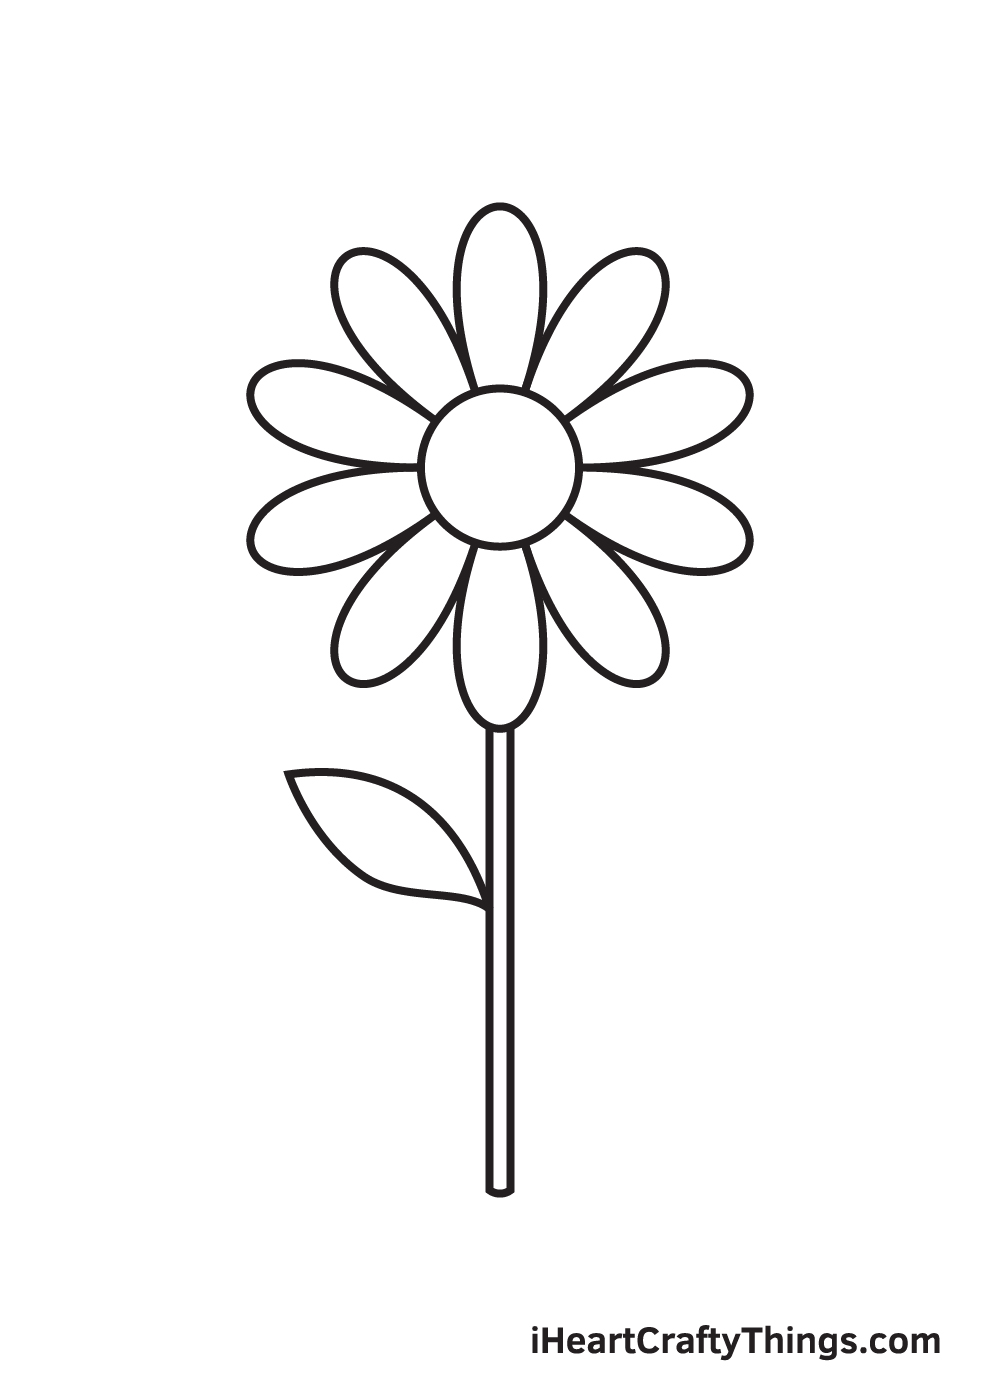 daisy drawing - step 6